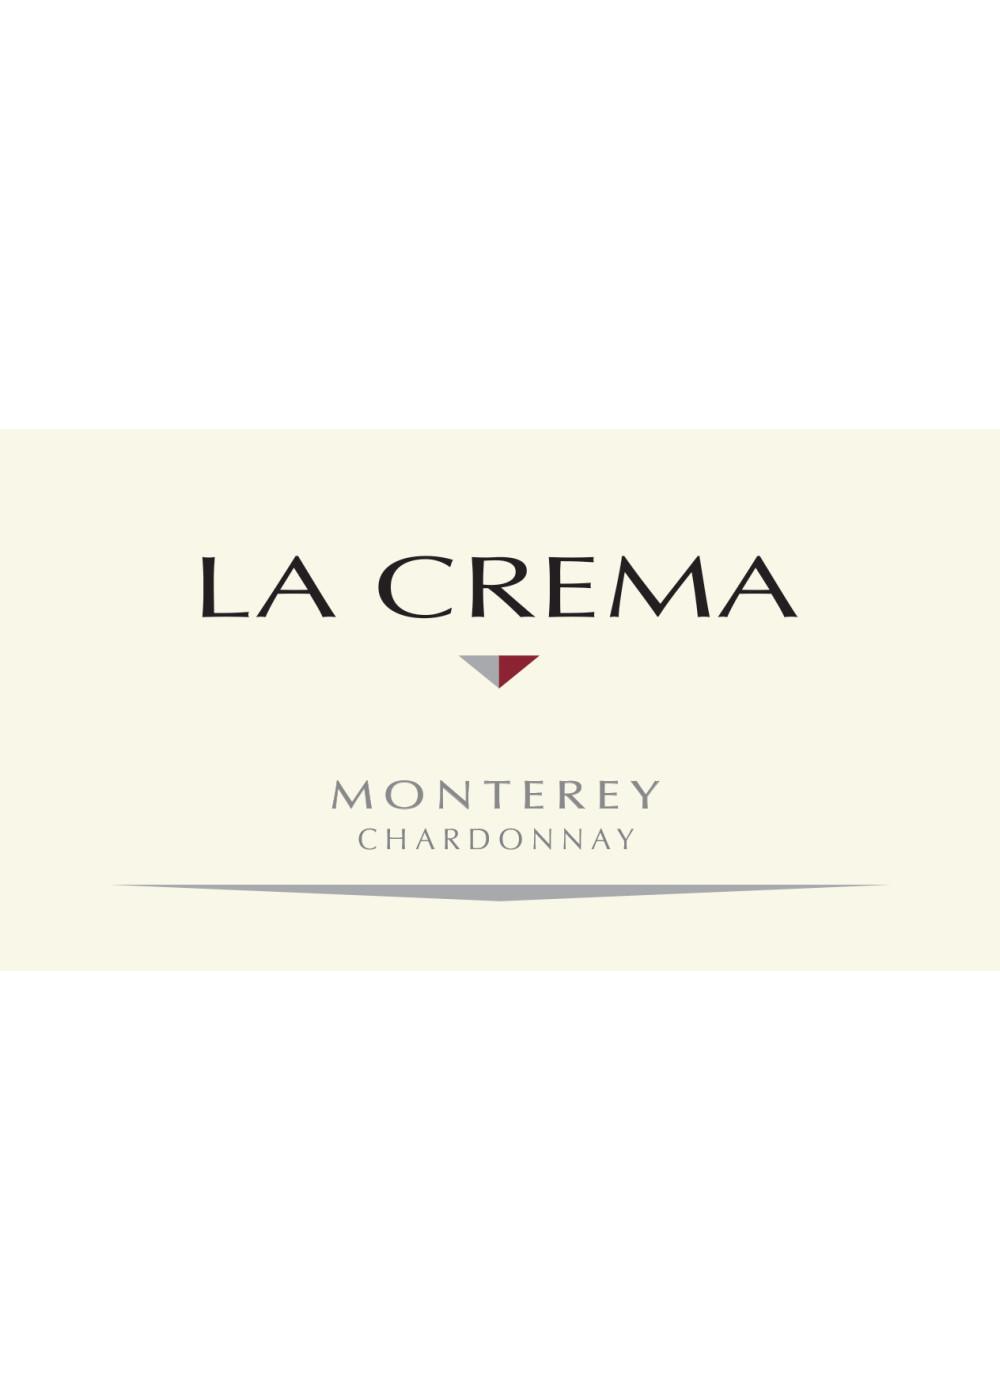 La Crema Monterey Chardonnay; image 3 of 3